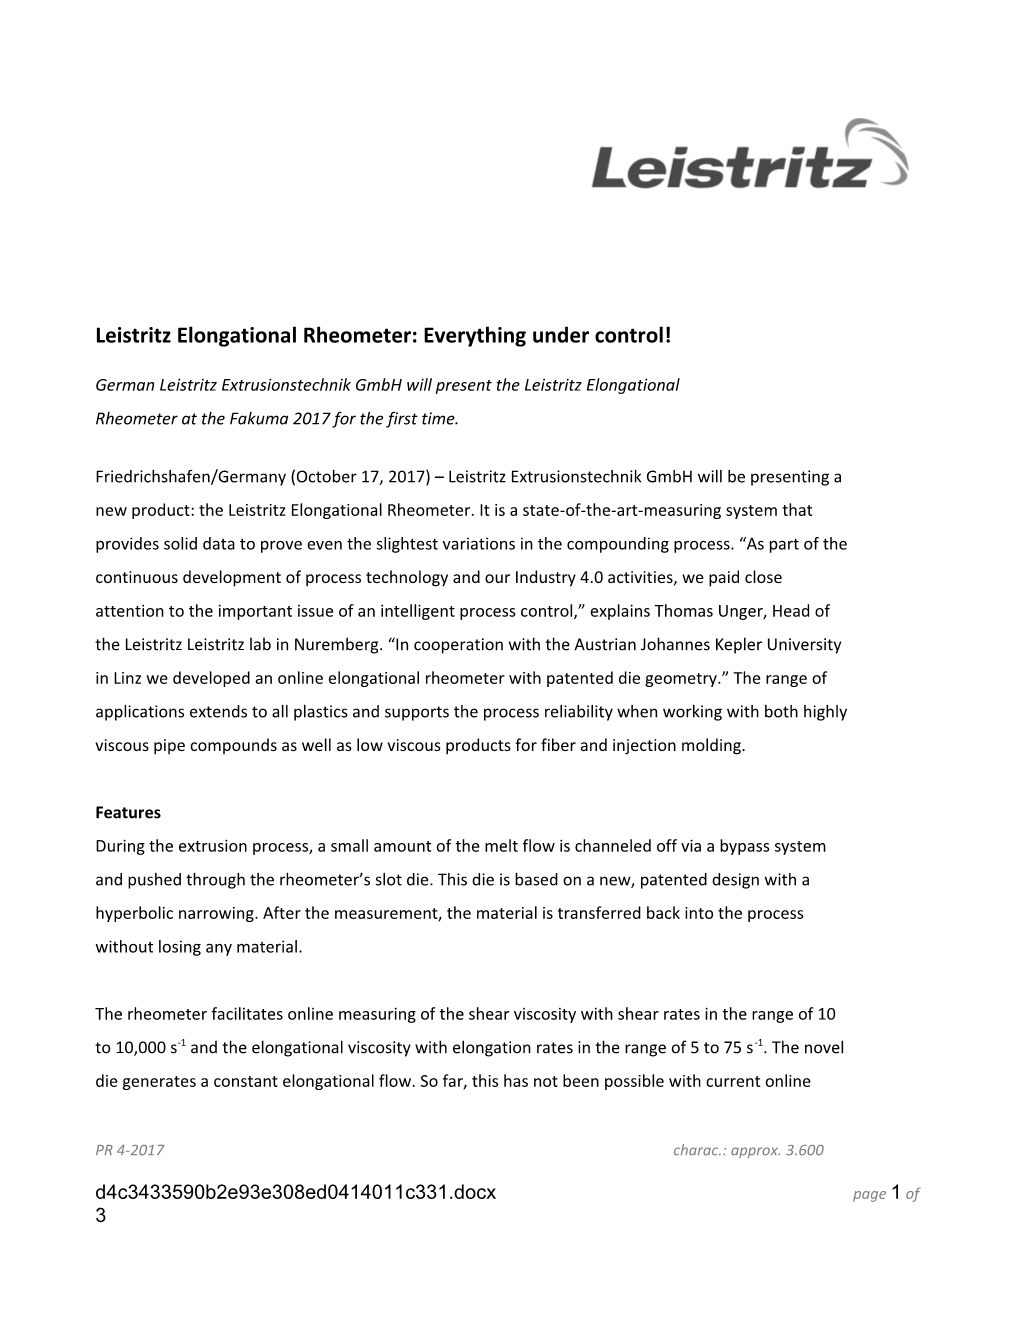 Leistritz Elongational Rheometer: Everything Under Control!